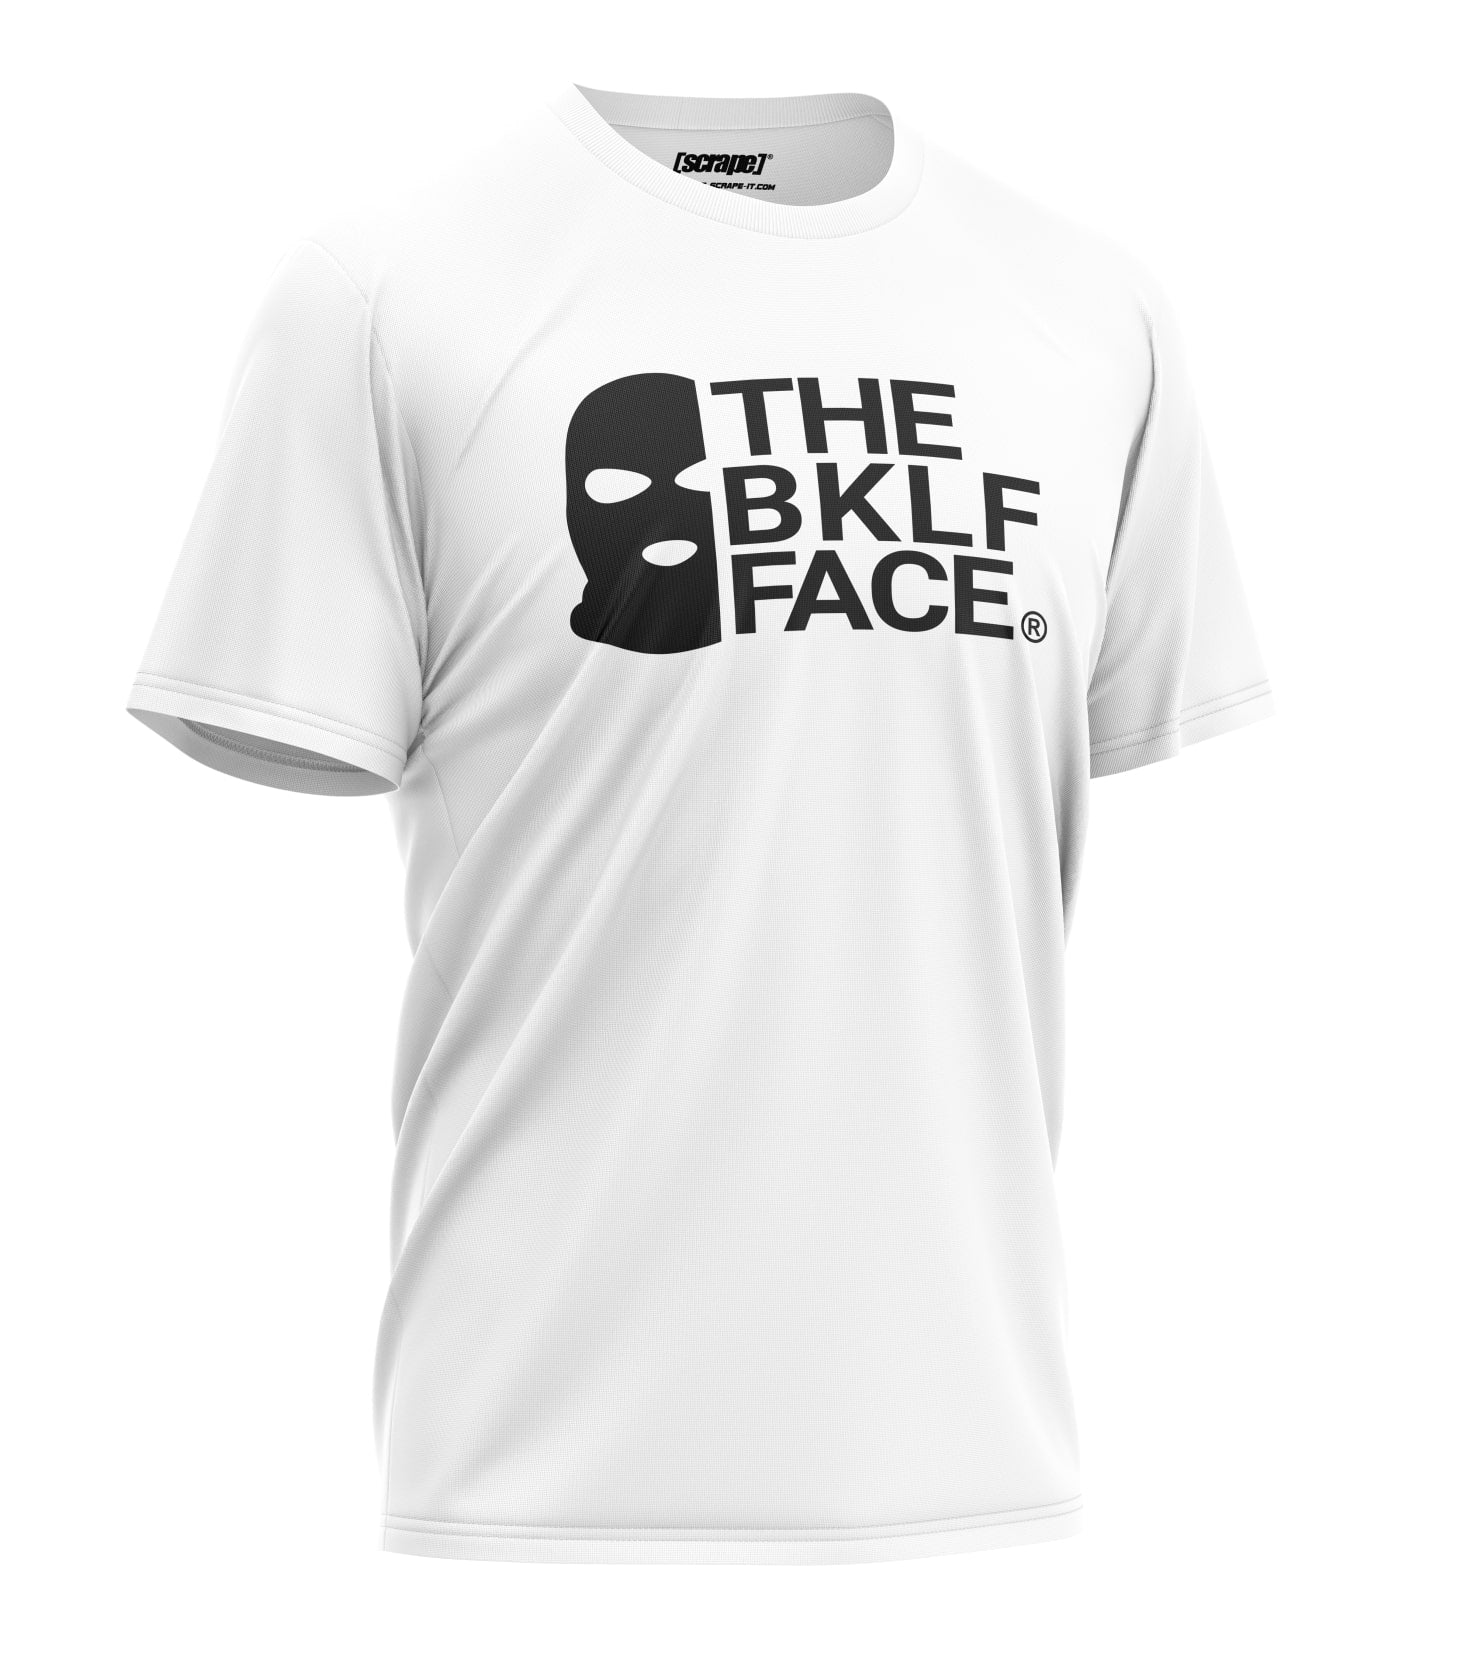 T-shirt [scrape]® THEBKLFFACE White